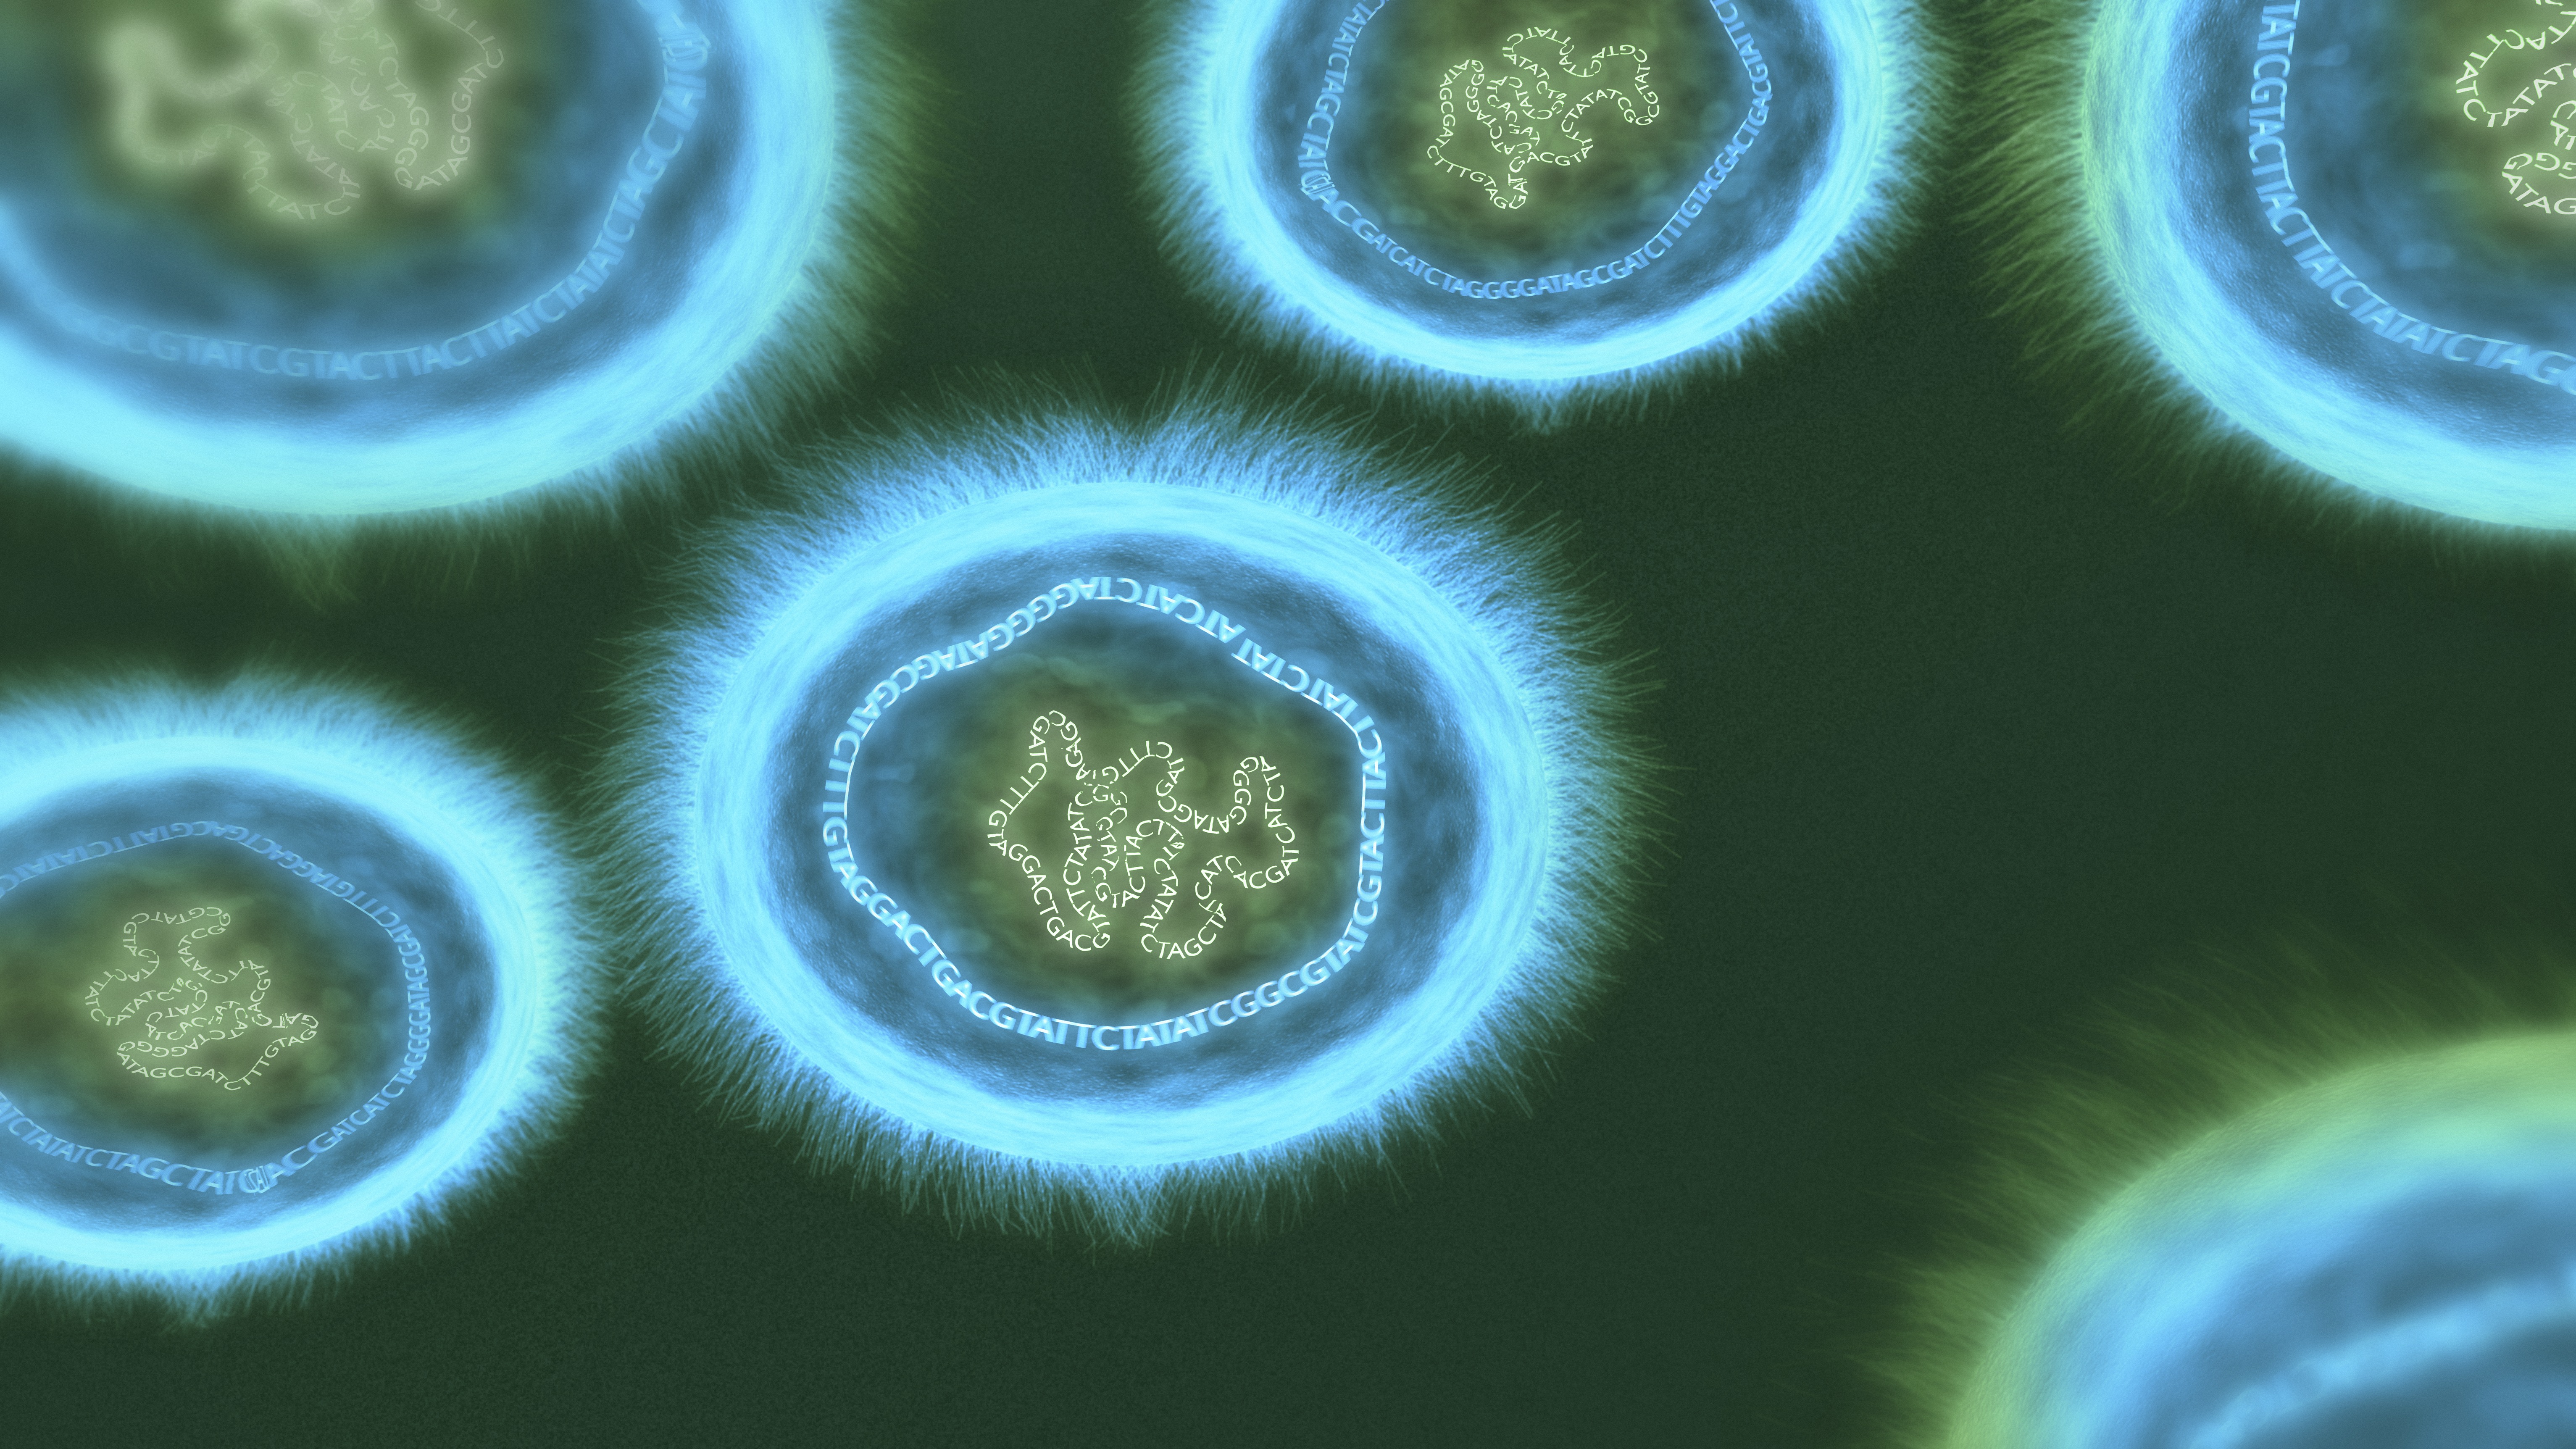 Кольцевая хромосома 2. Плазмиды бактерий микроскоп. Плазмиды бактериальной клетки. Плазмида ДНК. Плазмиды строение клетки бактерии.